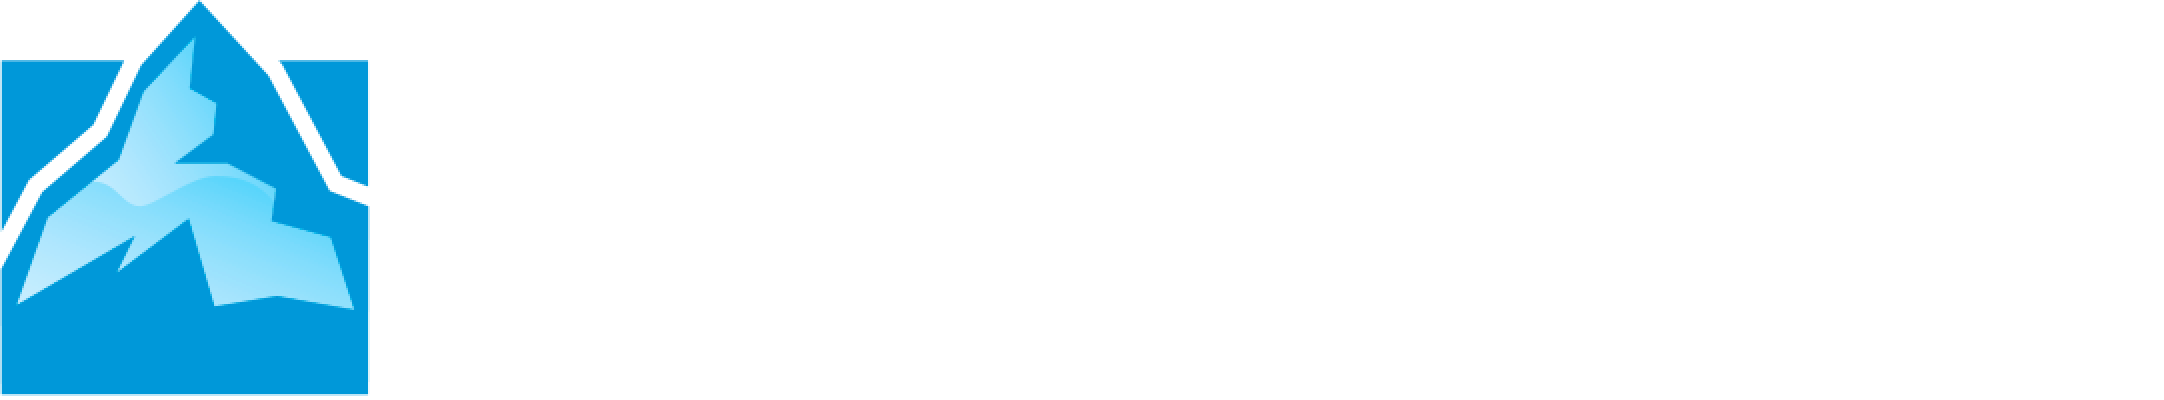 The Global Leadership Summit Logo